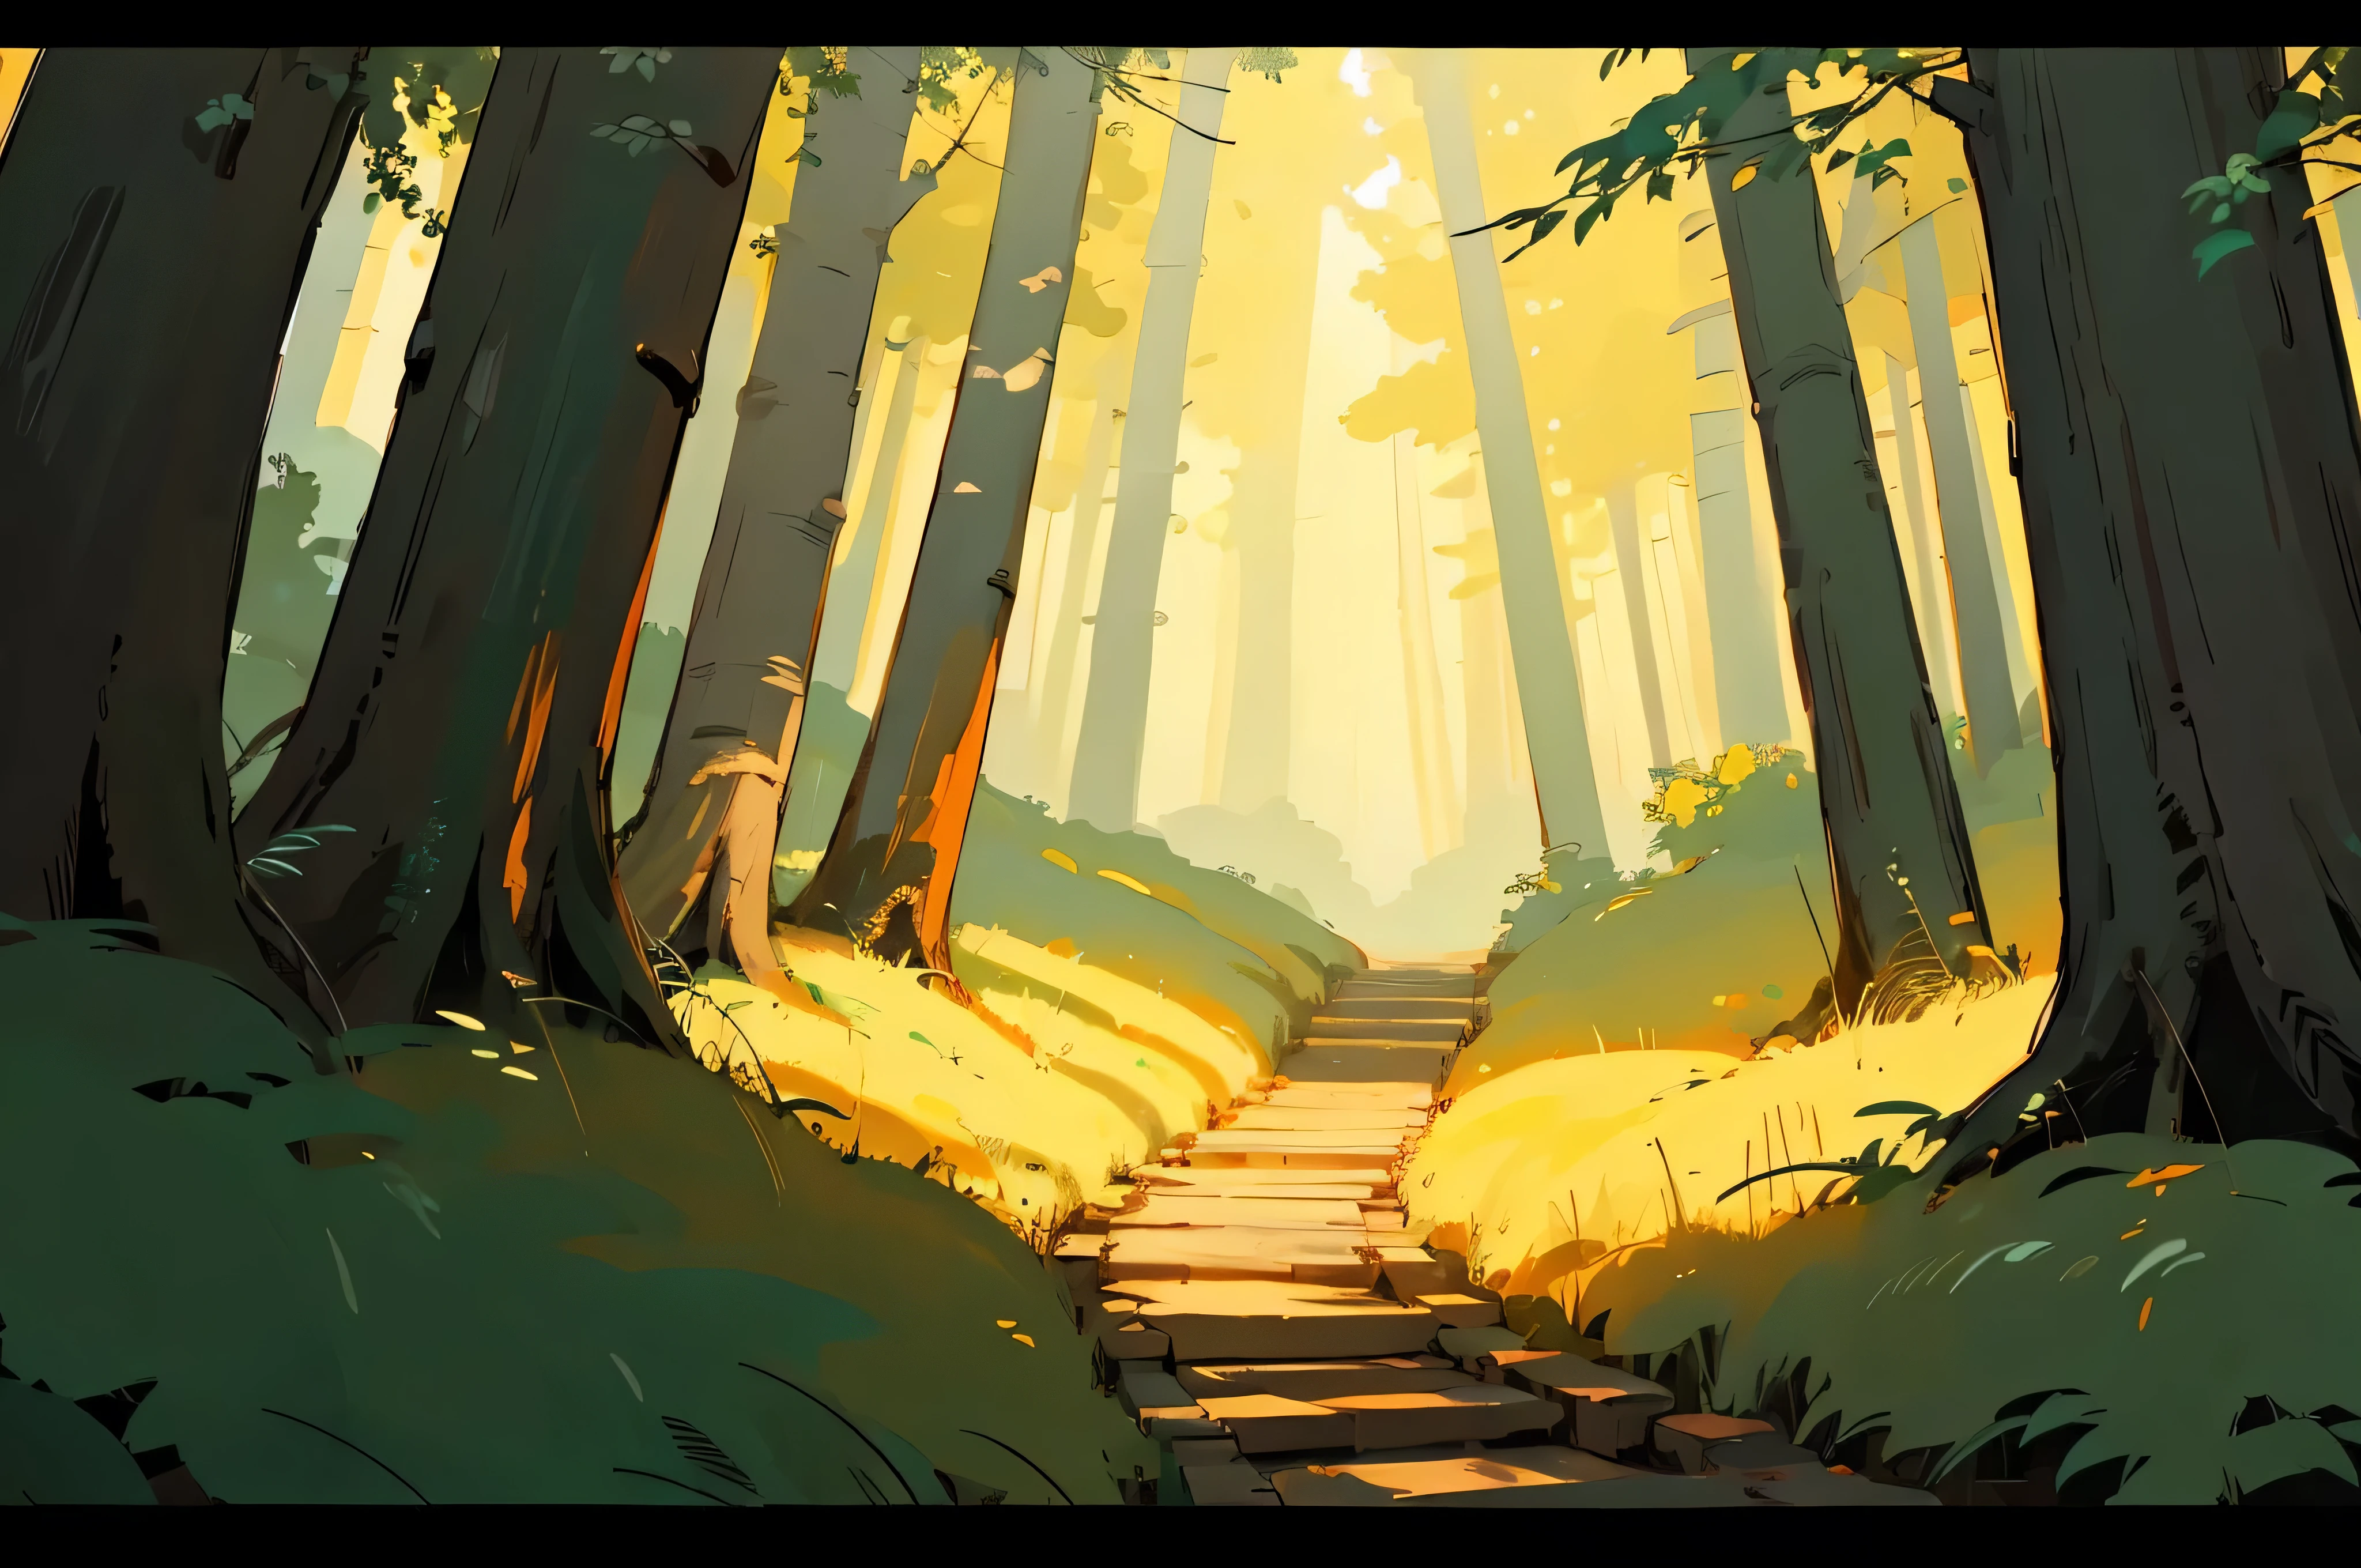 Estilo de fundo Ghibli, floresta, cores brilhantes, Atmosfera envolvente, estilo anime, luz suave, sem caracteres, apenas plano de fundo